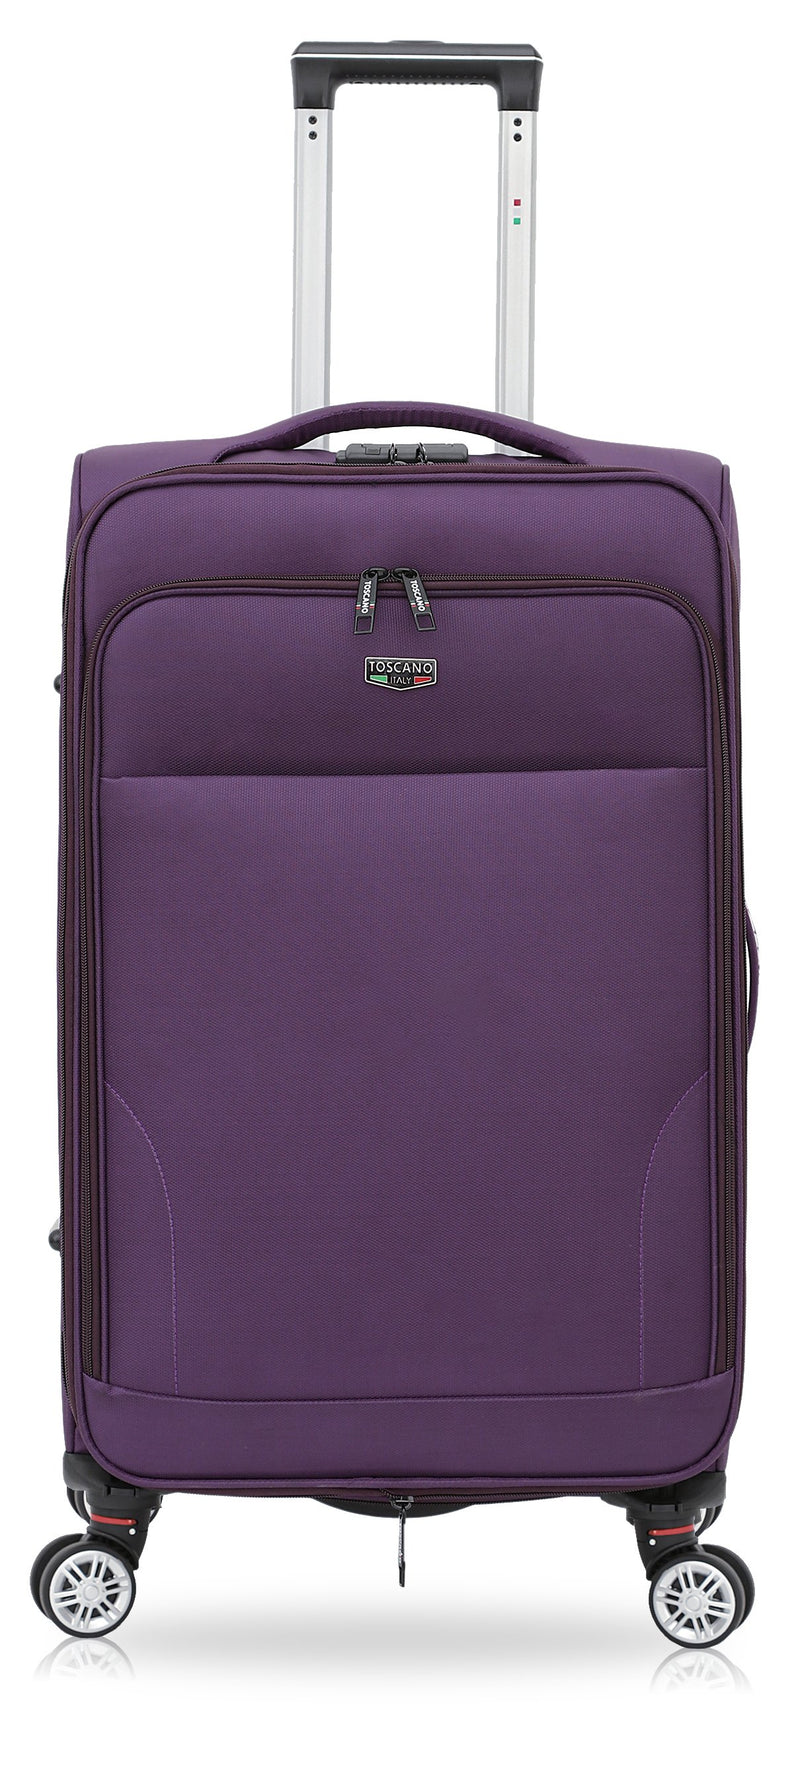 TOSCANO by Tucci 26-inch Ricerca  Medium Luggage Suitcase